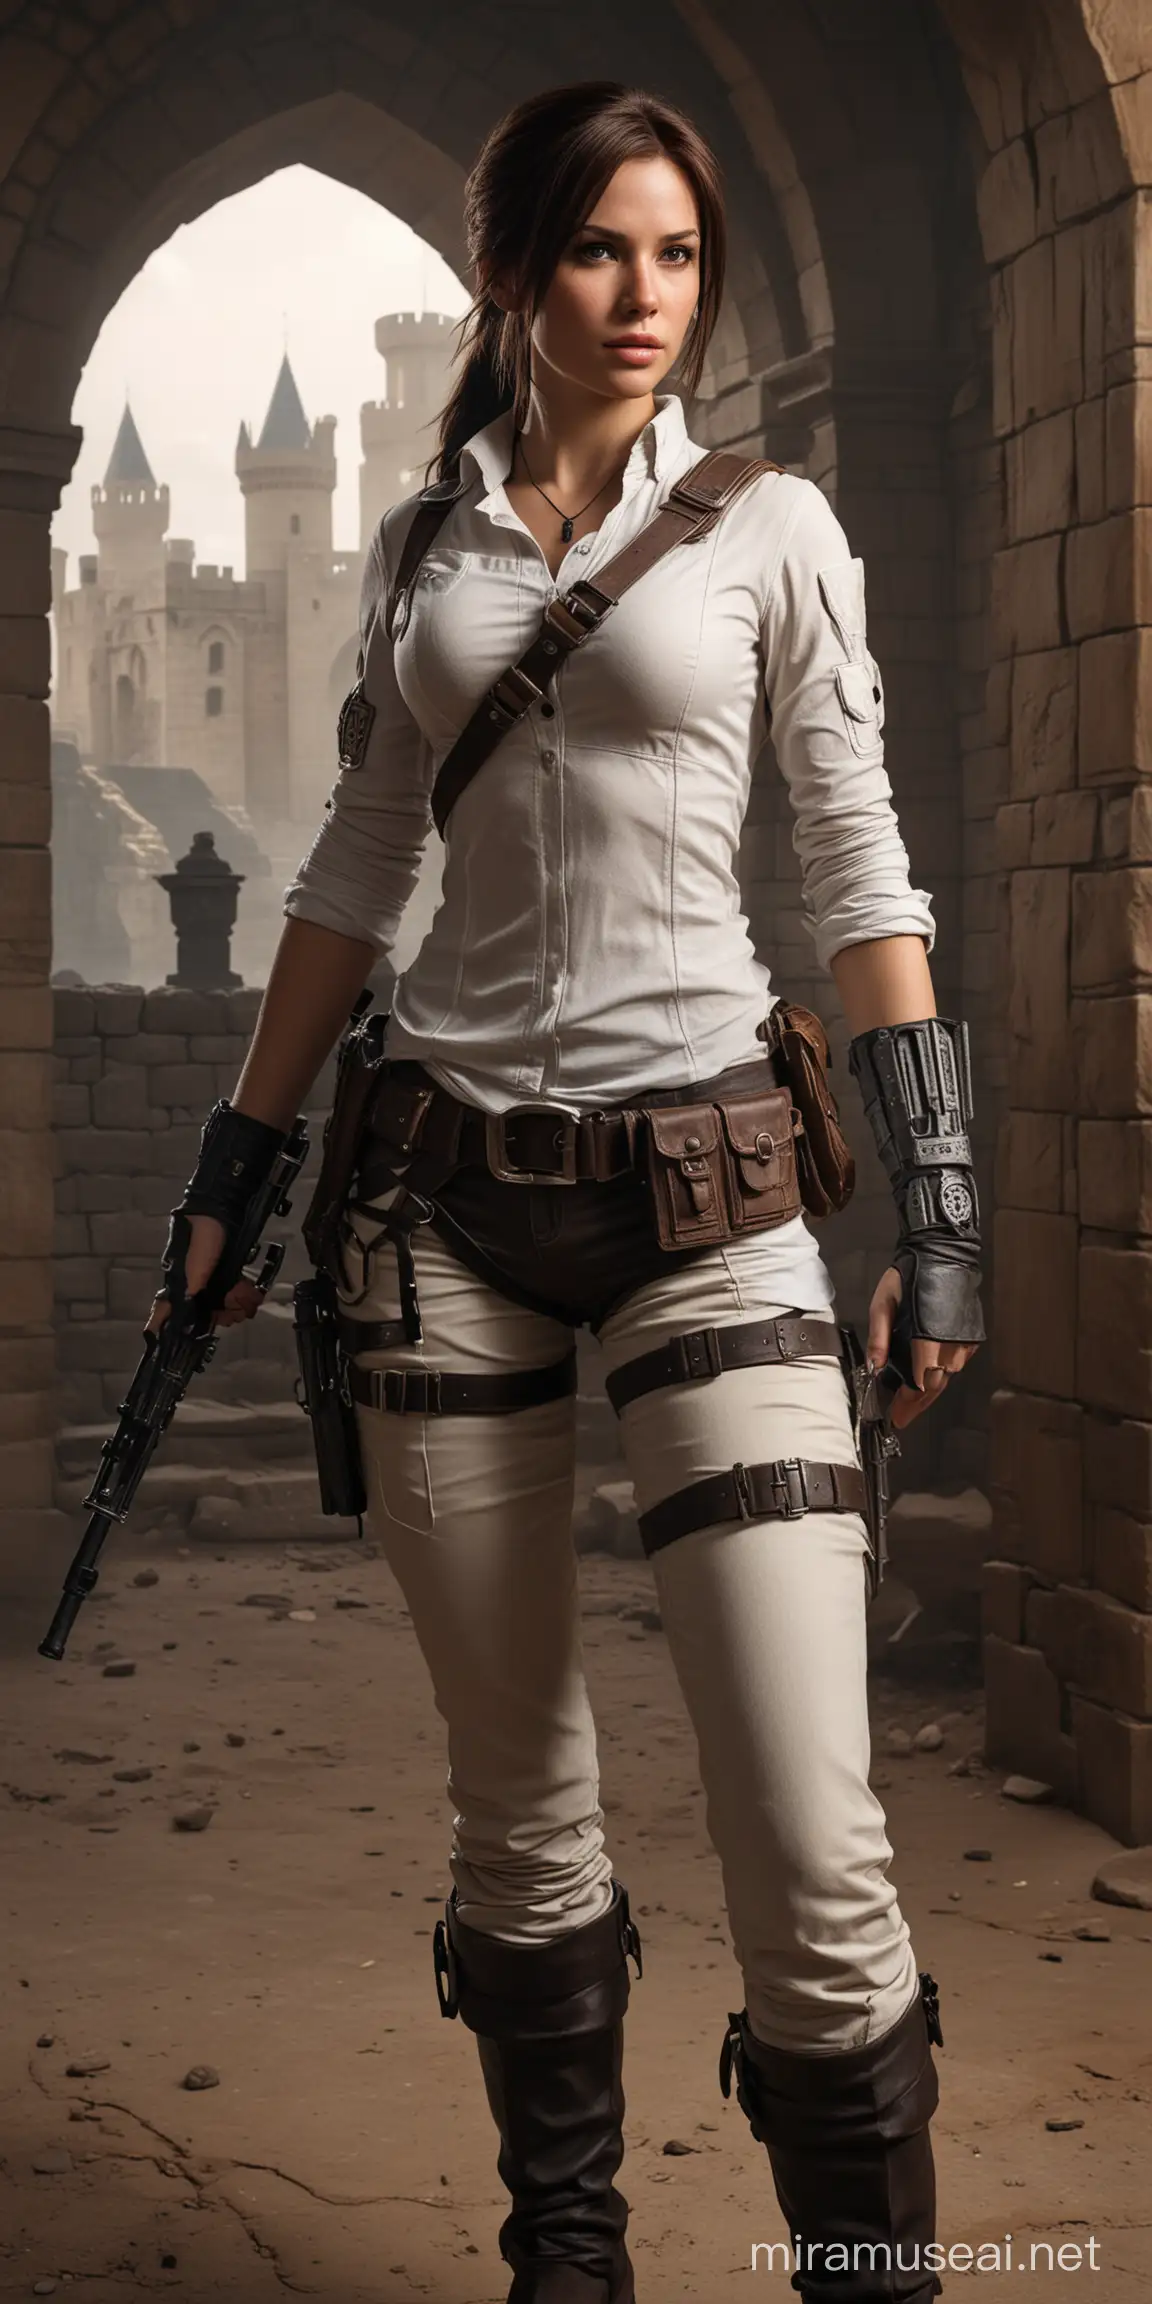 Realistic Idol Girl LaraCroft Templar with Castle Backdrop